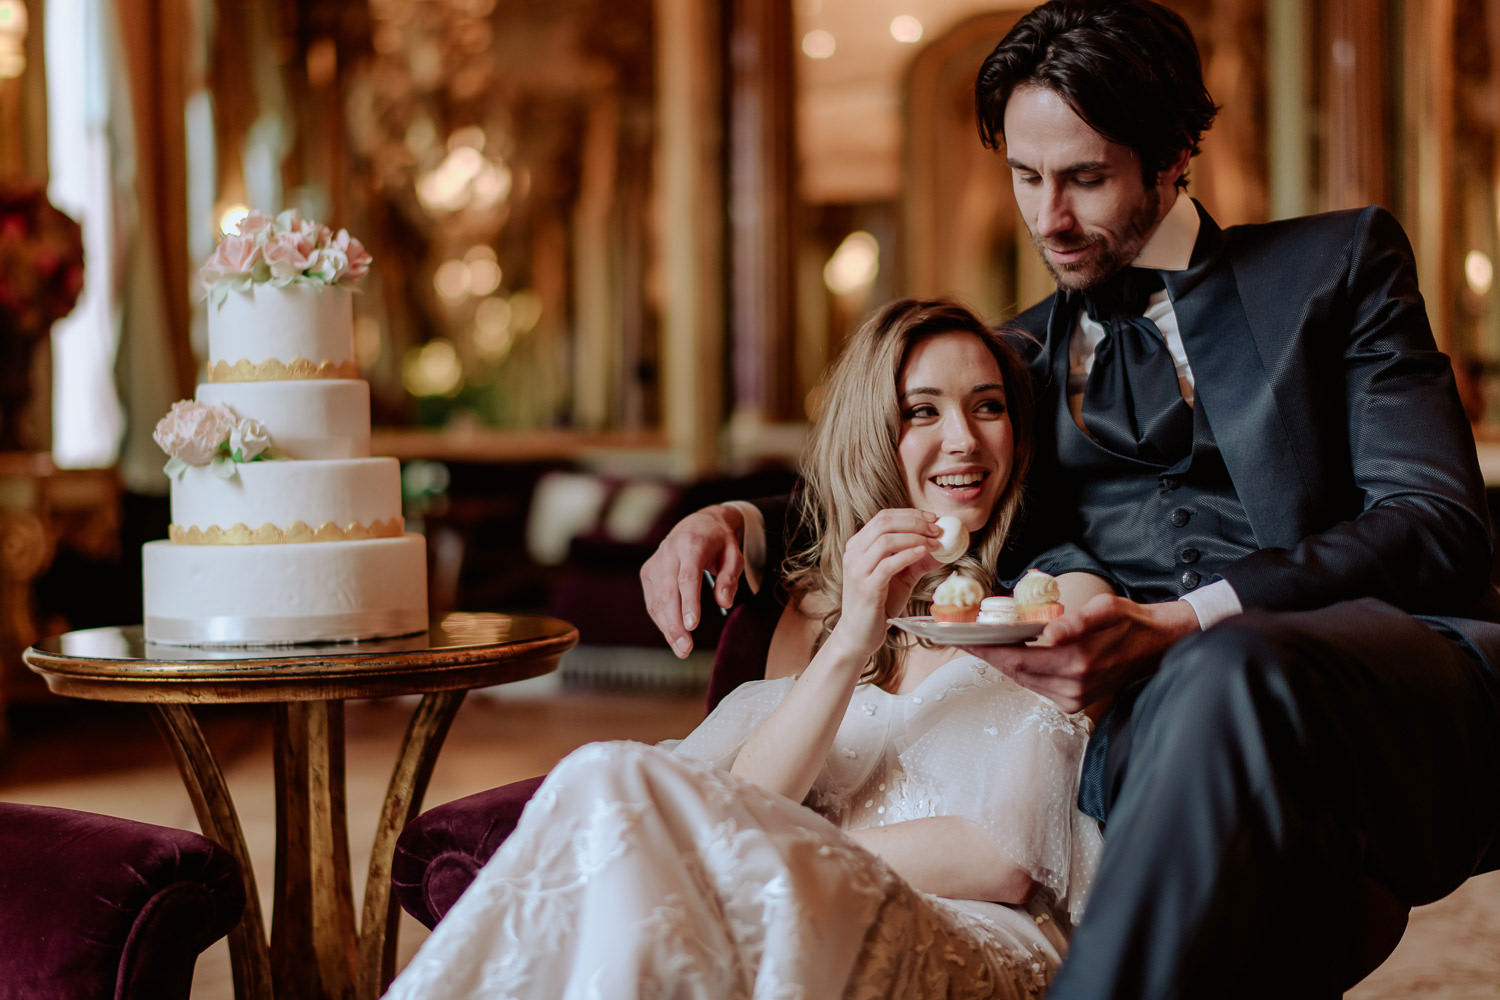 florence-luxury-wedding-photography-Villa-Cora-elopement-cake-se